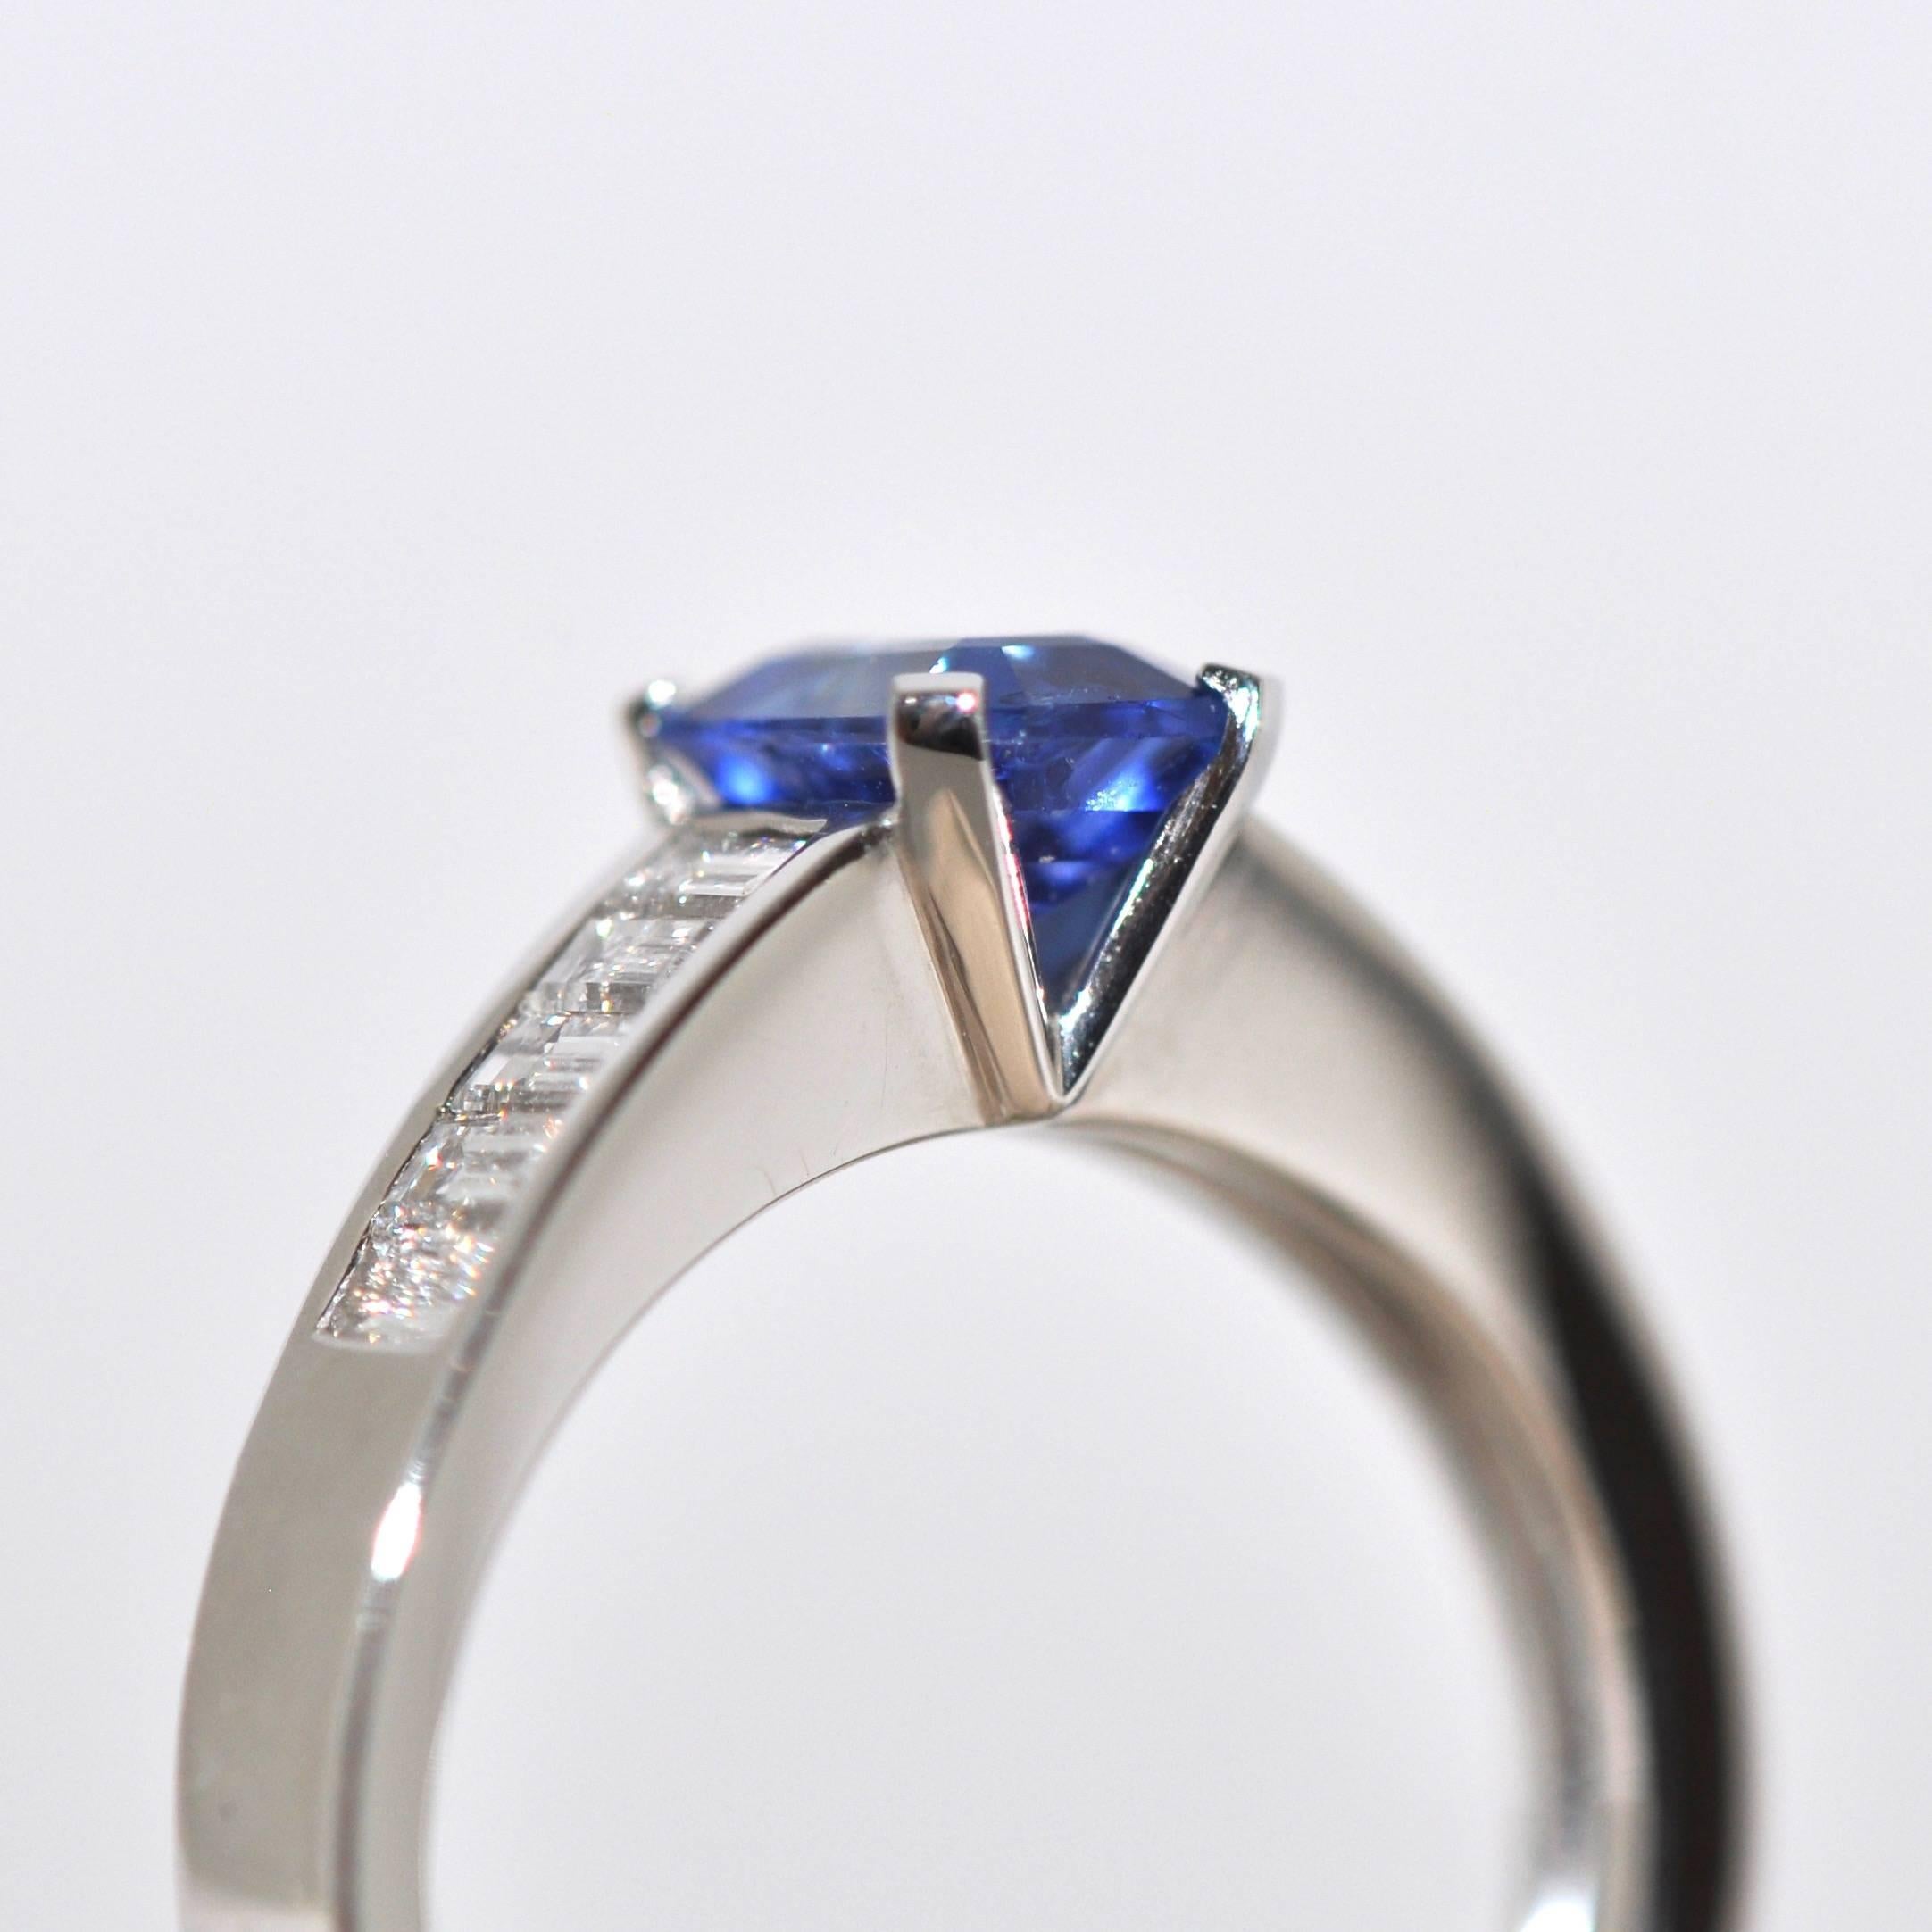  Blue Sapphire Emerald Size and White Diamonds White Gold Unique Ring.
Blue Sapphire 1.22 Carat
10 White Diamonds color F/G 0.59 Carat
White Gold 18 Carat
French Size 53 / US Size 6 1/4
